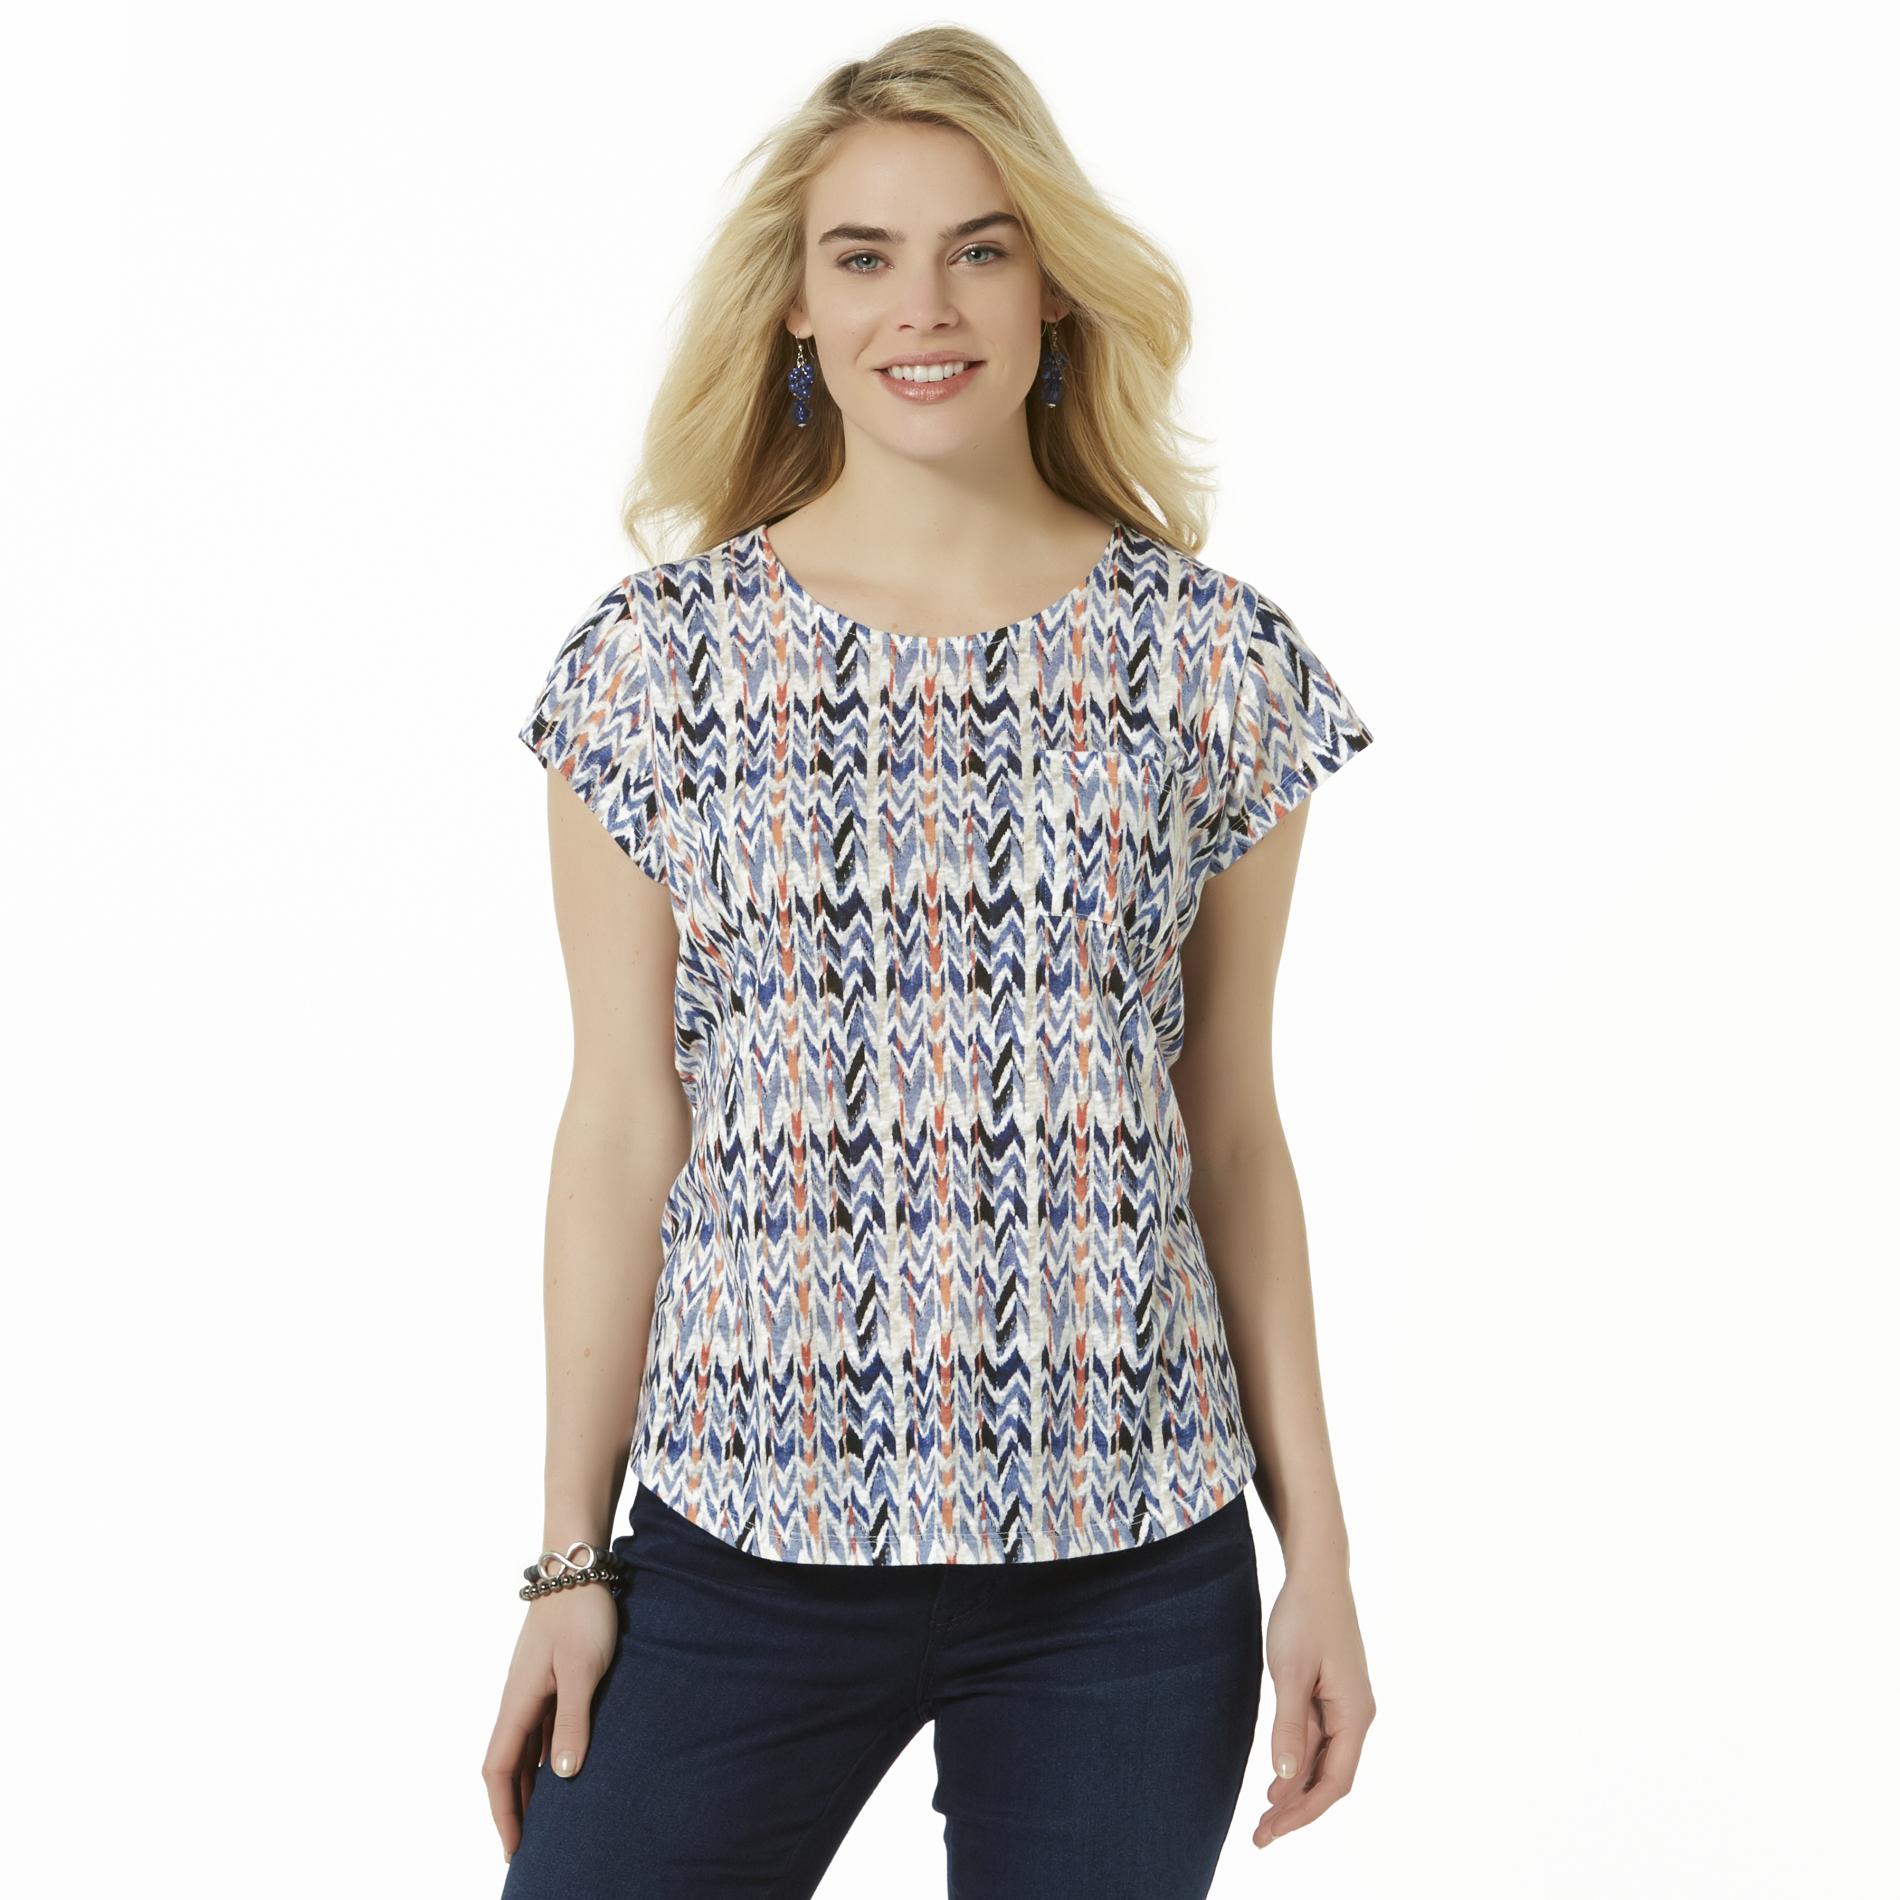 Canyon River Blues Women's Pocket T-Shirt - Geometric